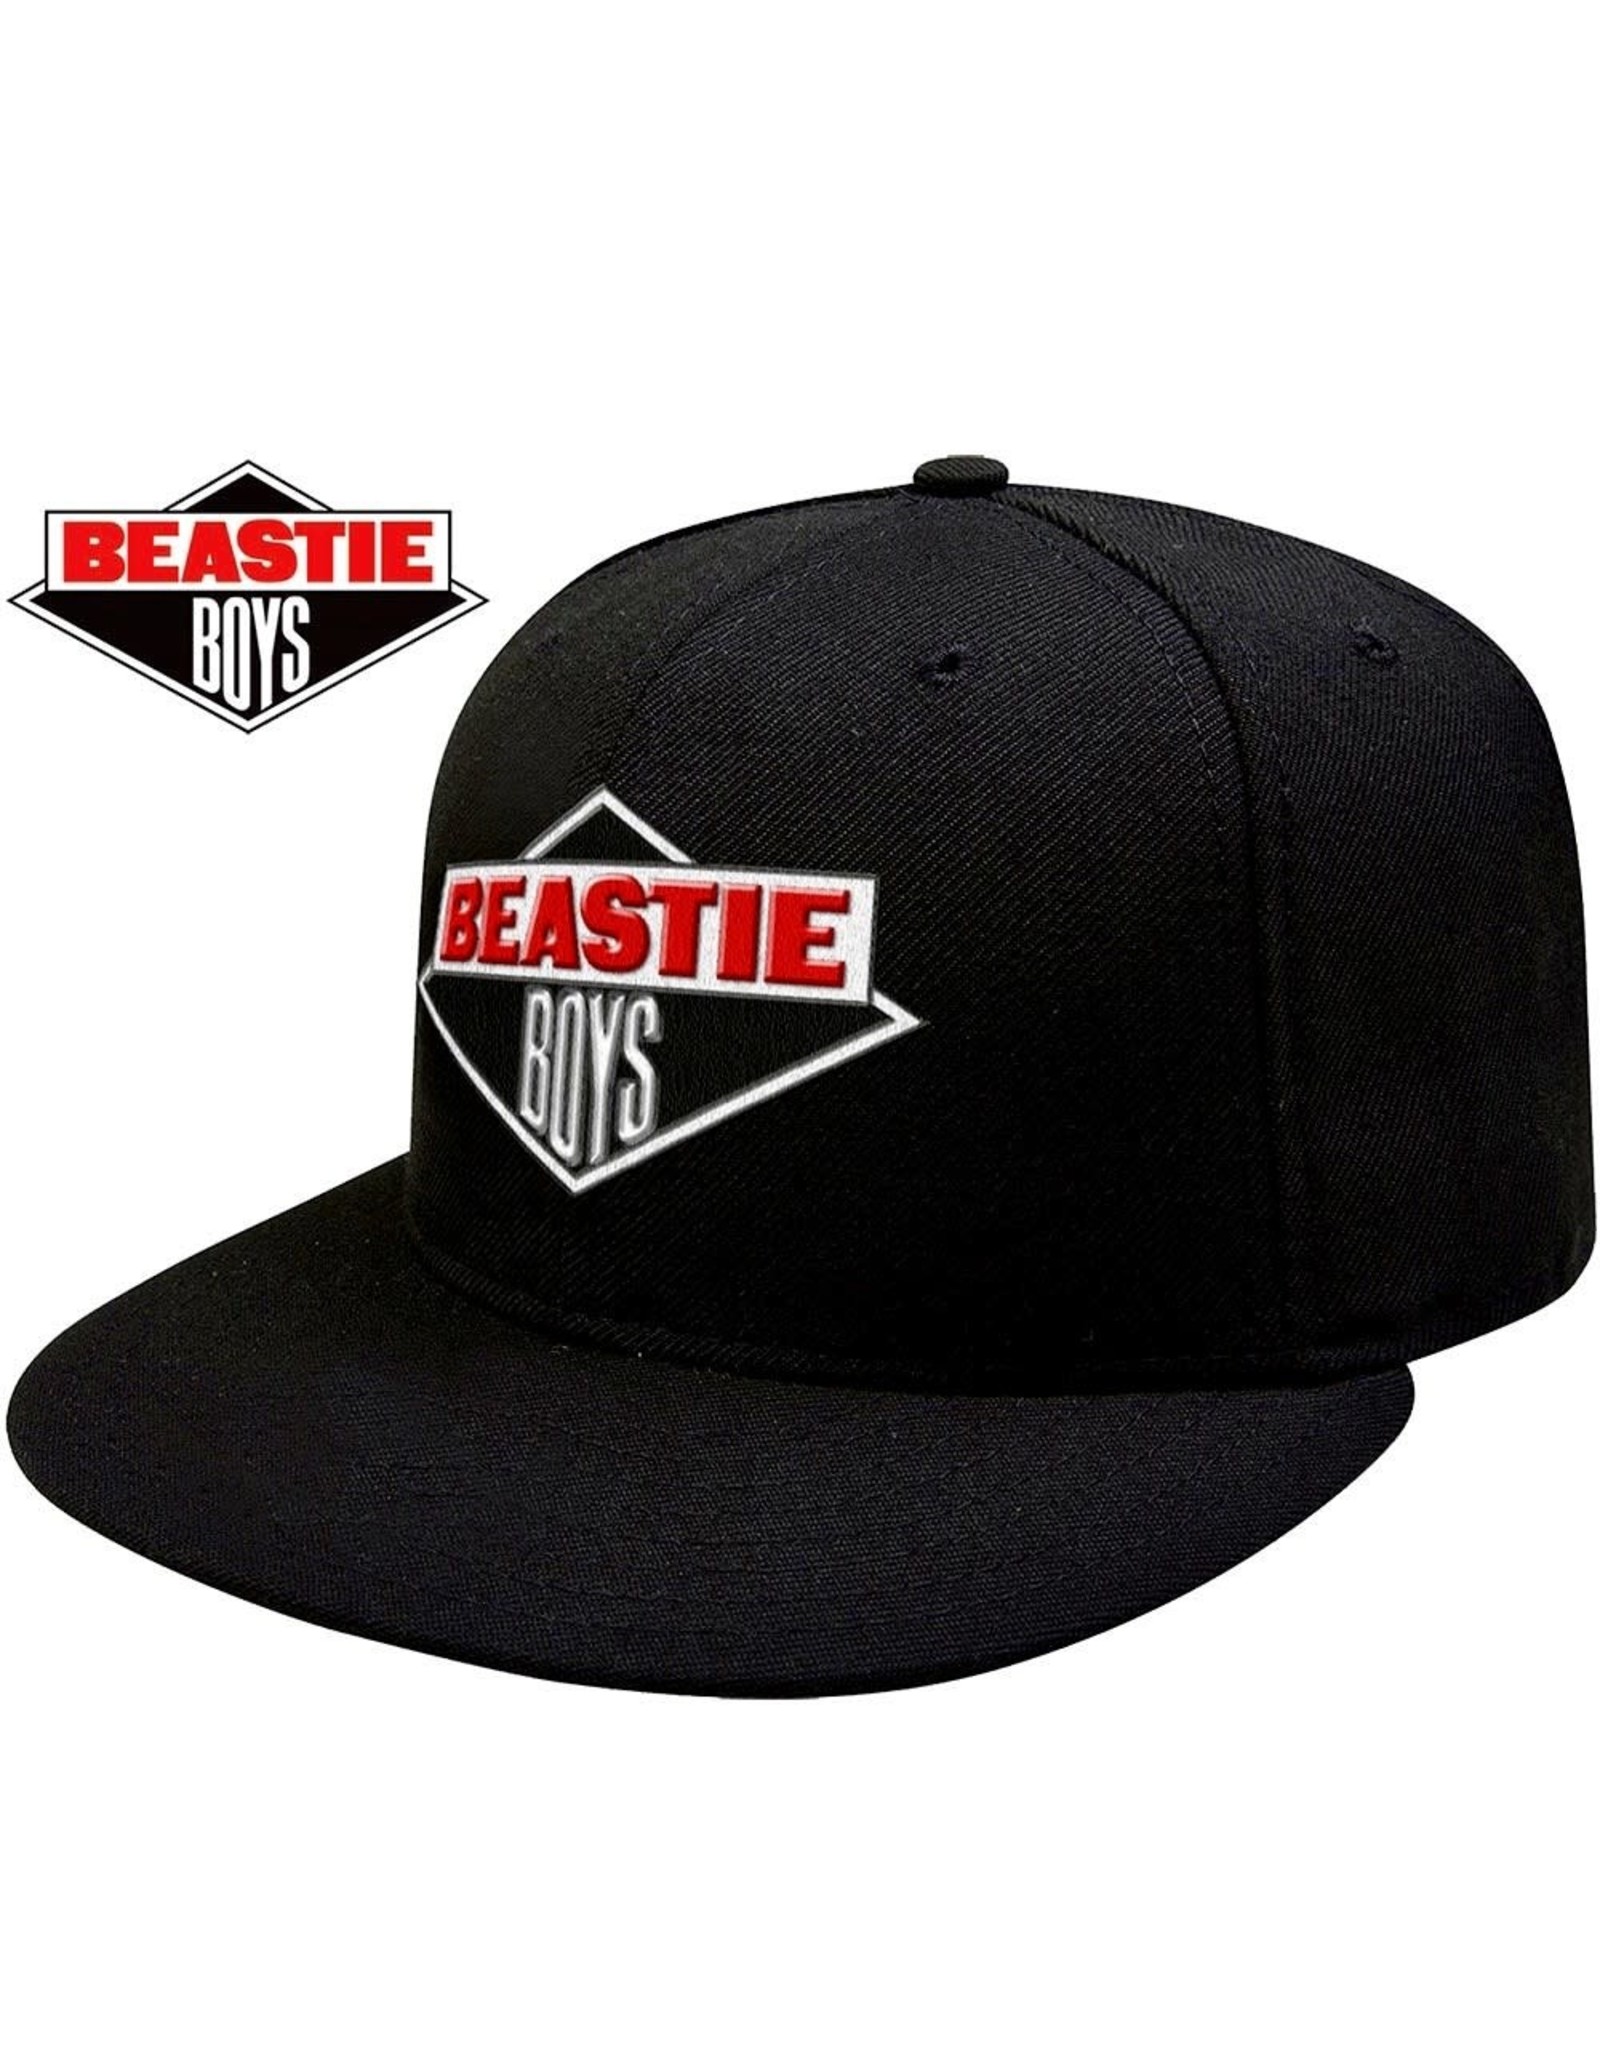 Beastie Boys / Classic Logo Snapback Cap